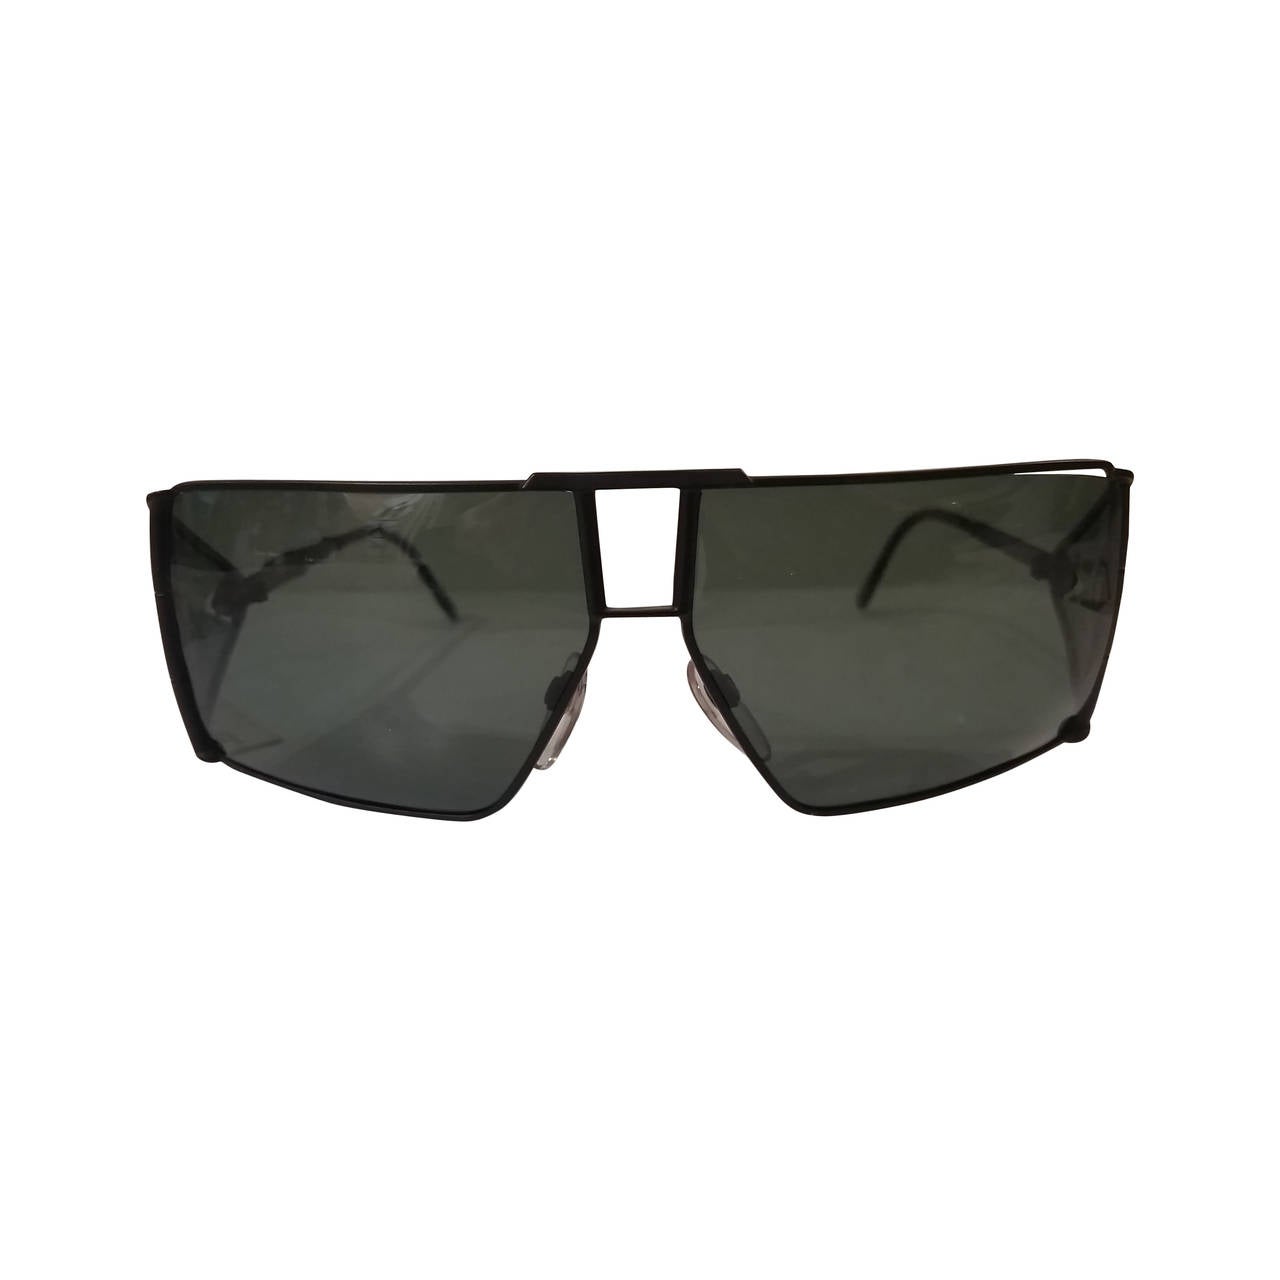 1980s Gianni Versace black sunglasses